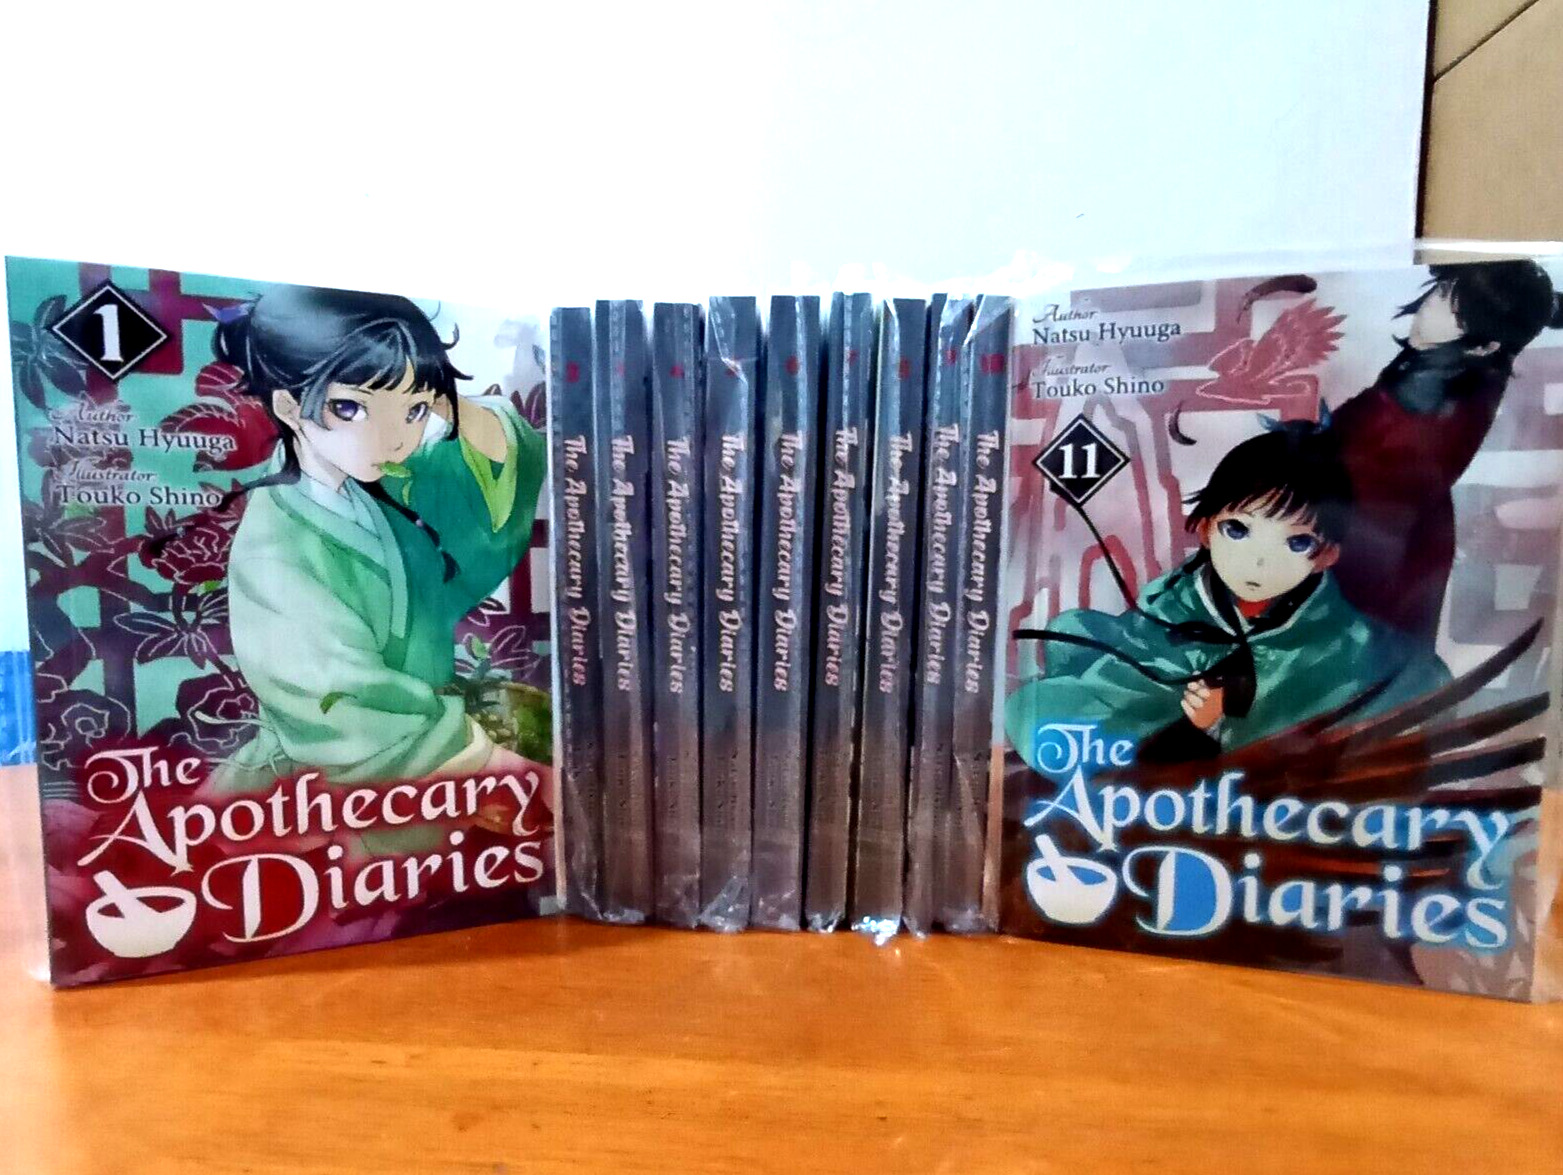 The Apothecary Diaries (Light Novel) Vol 1-11 Set English Version 